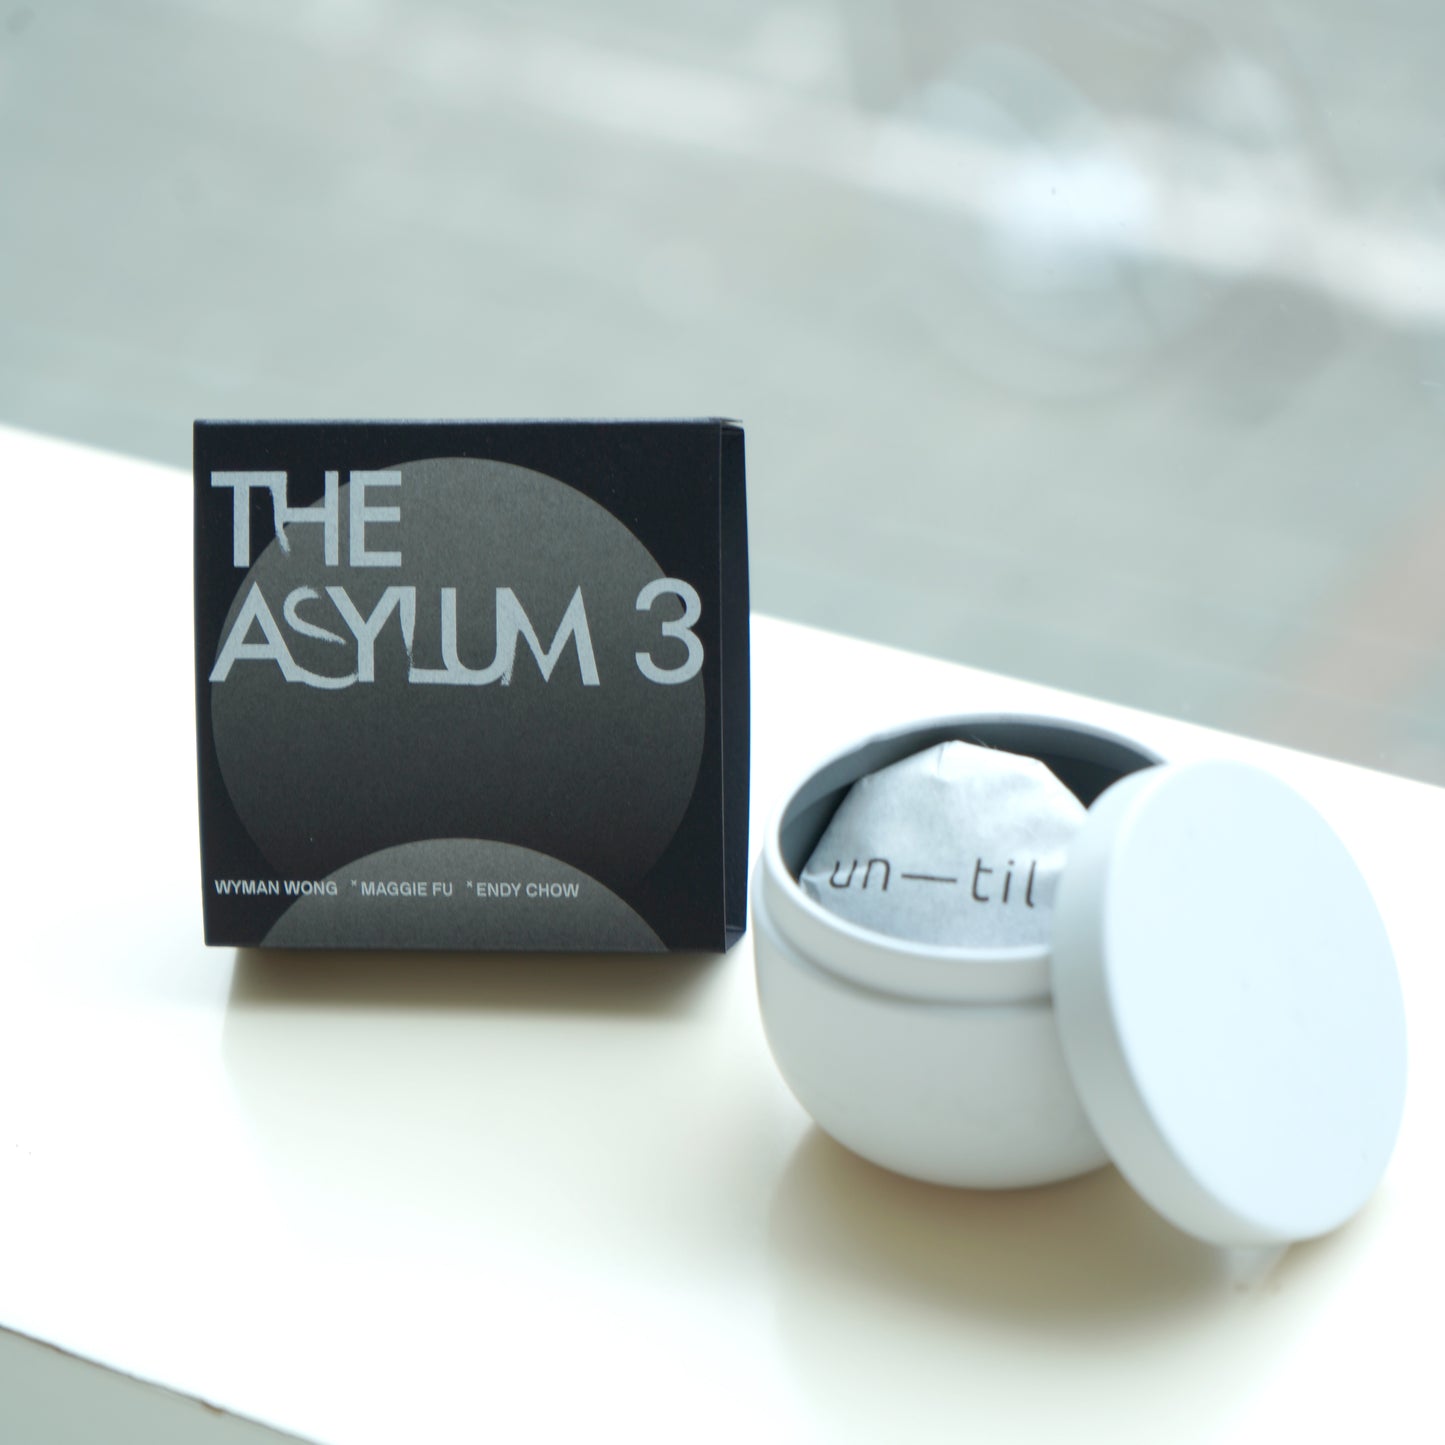 The Asylum 3 X UNTIL COFFEE 茶包